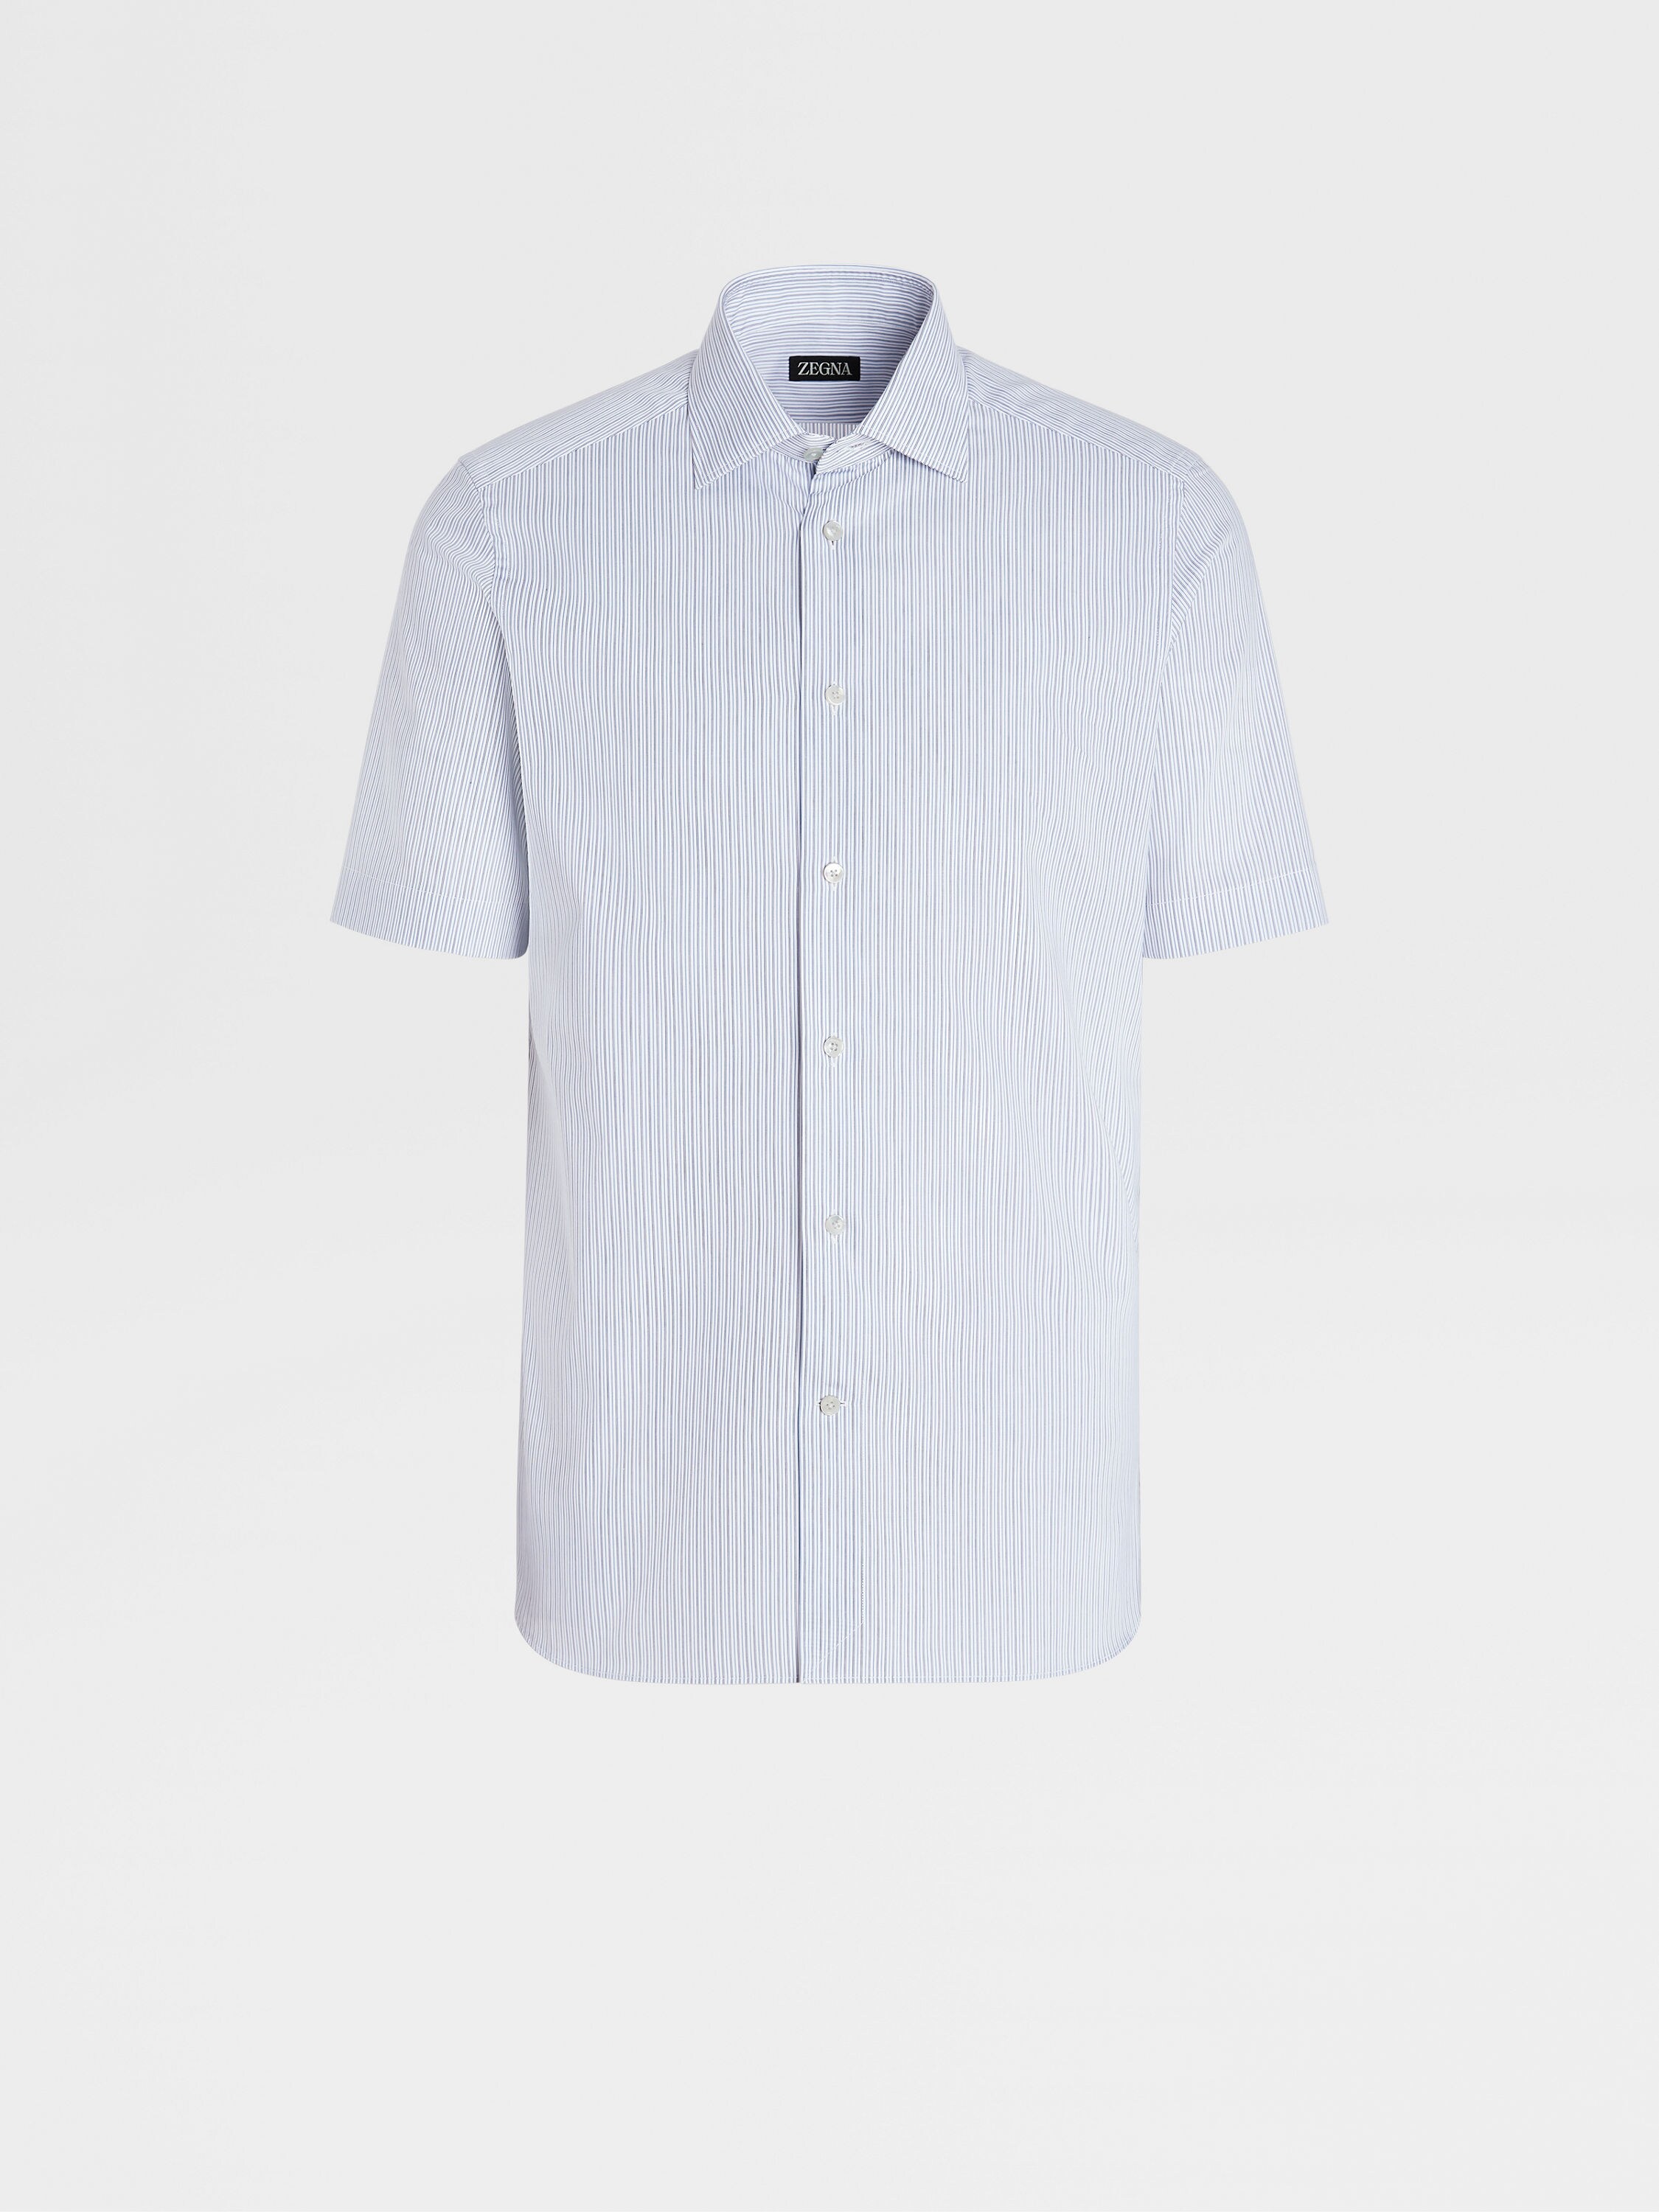 Navy Blue Striped Cotton Short-sleeve Tailoring Shirt